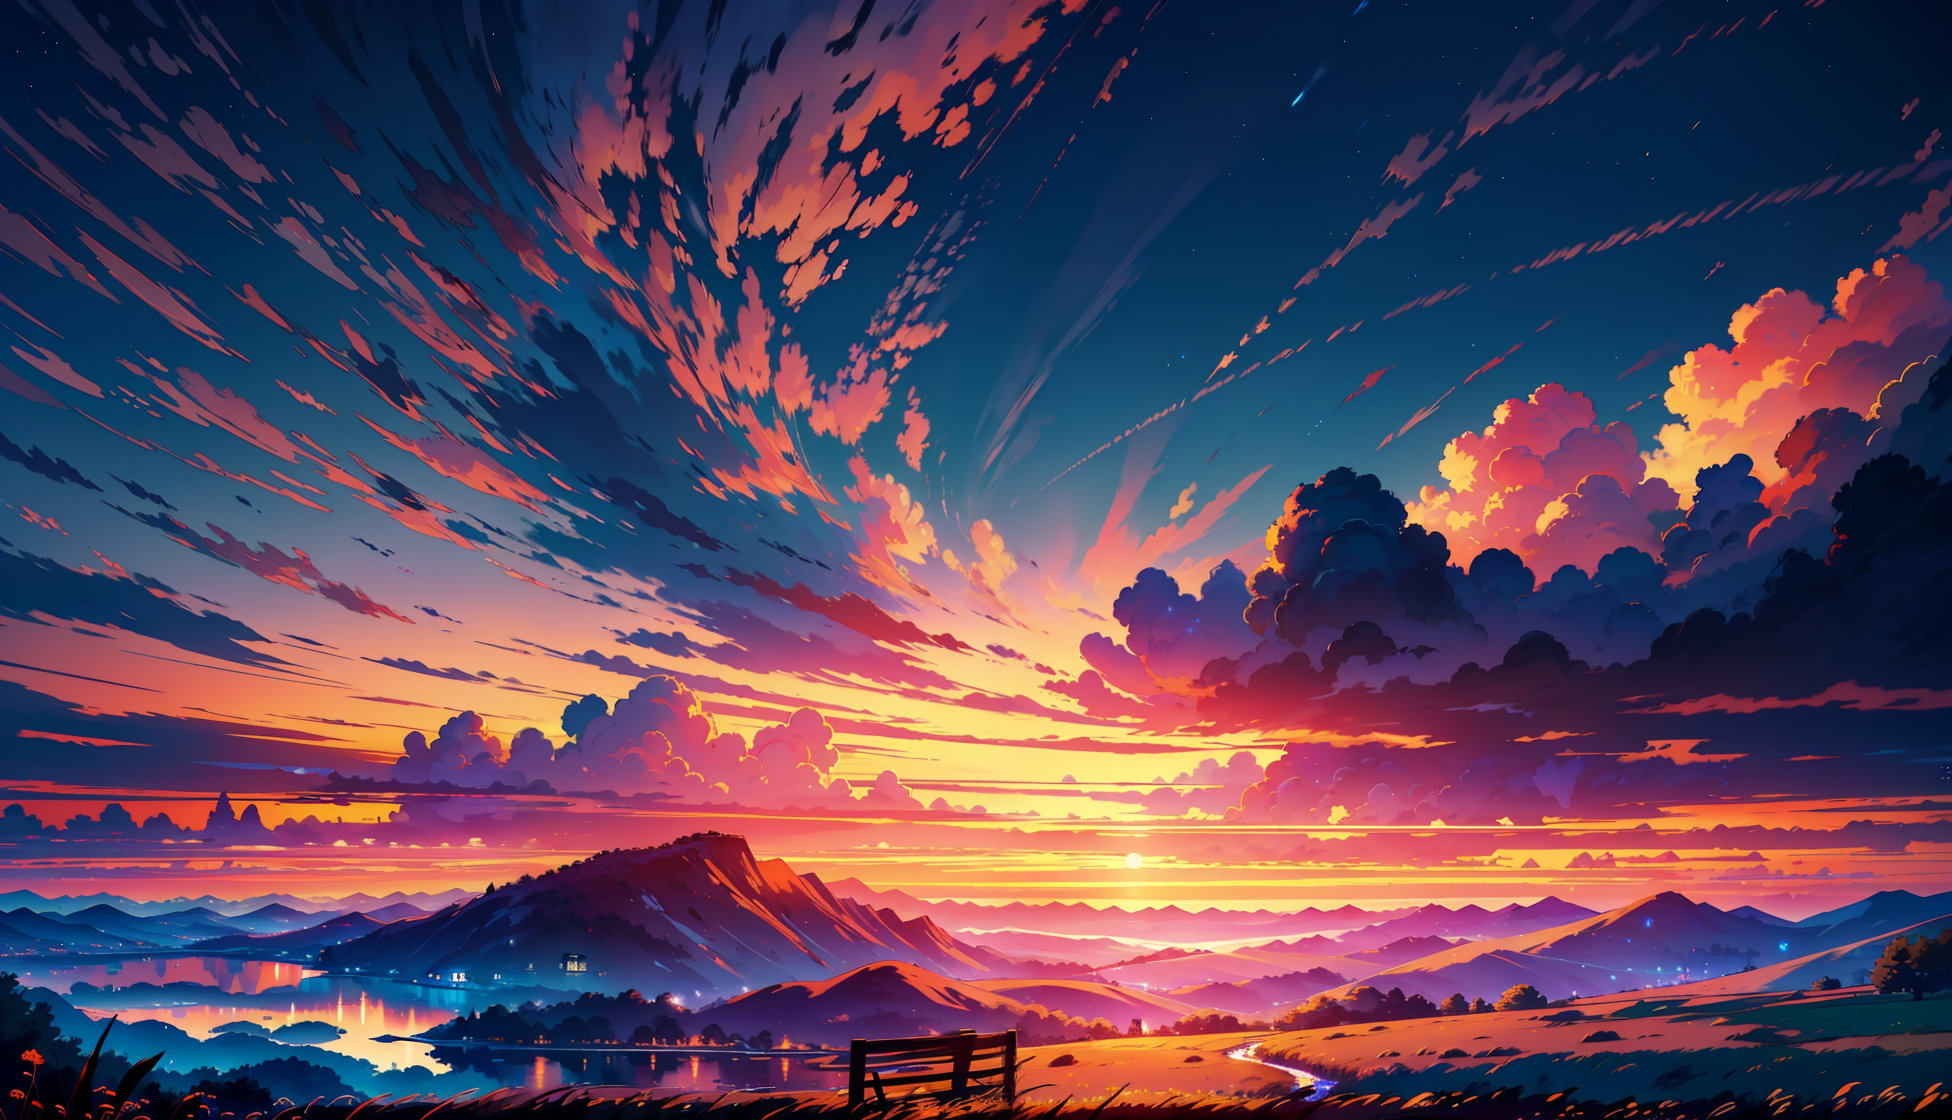 Vibrant anime-inspired artwork depicting a breathtaking sunset scene, perfect as an HD desktop wallpaper.